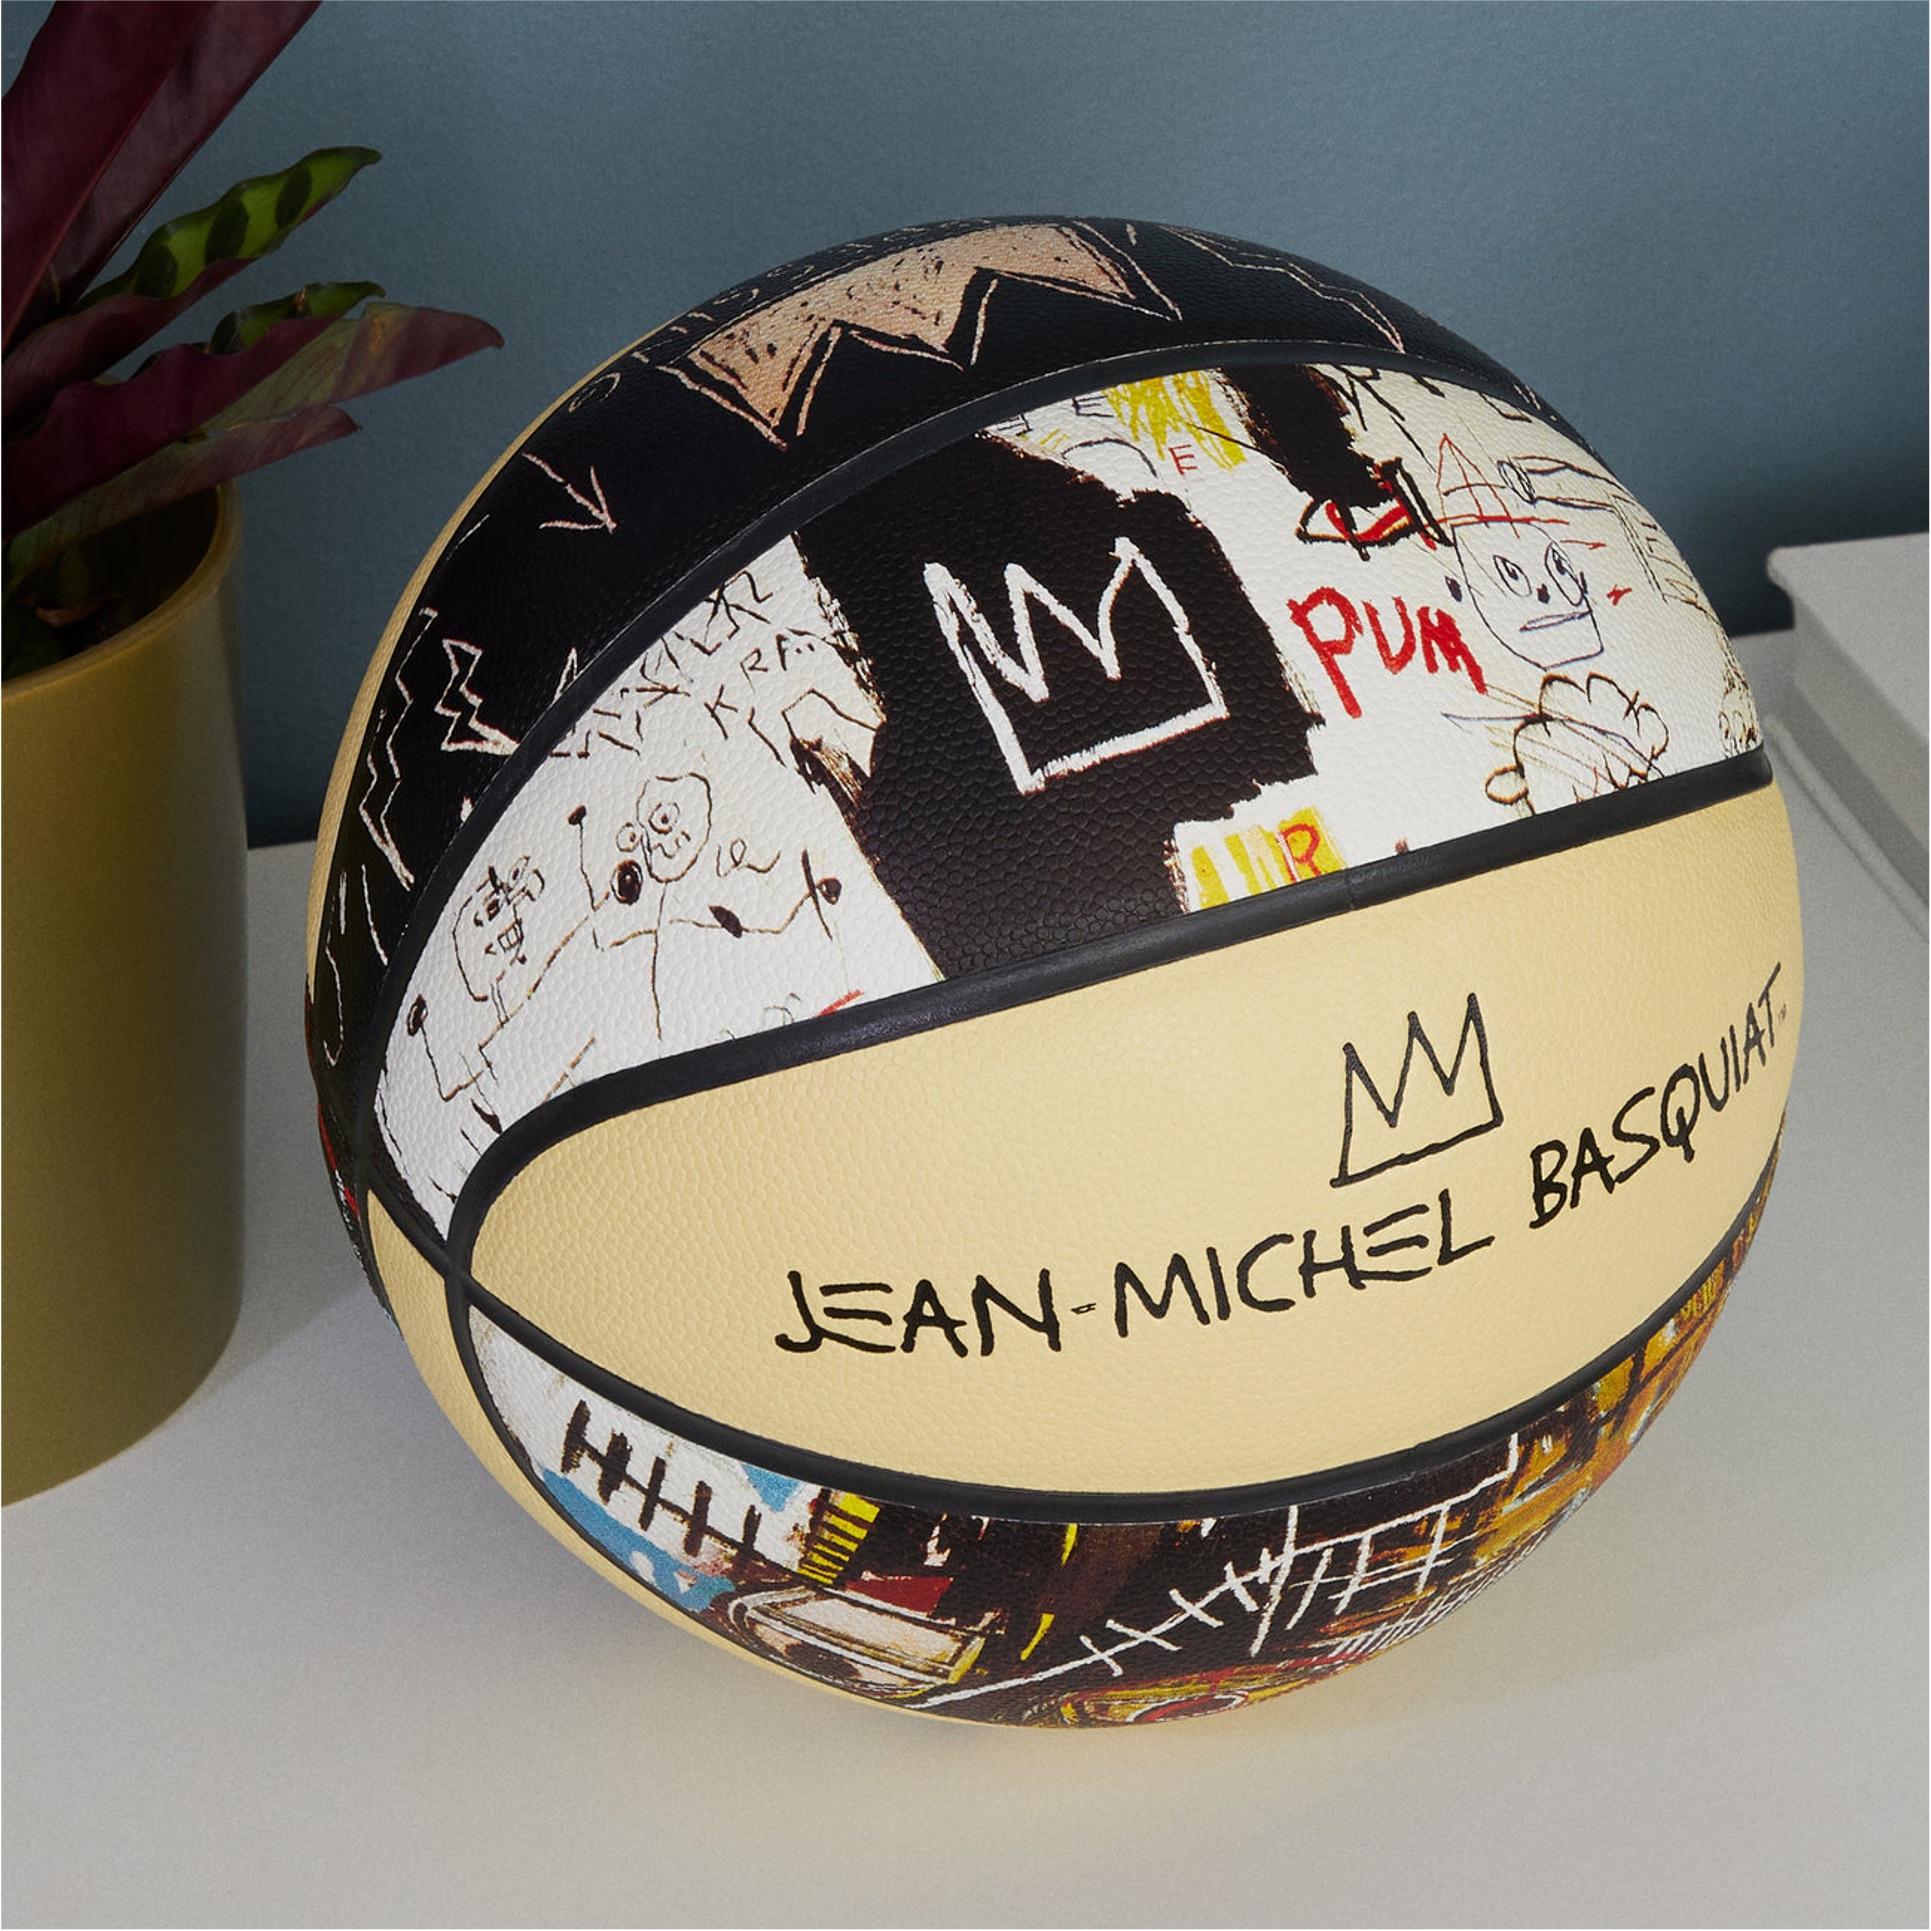 Jean-Michel Basquiat - Lifeblood Basketball 1